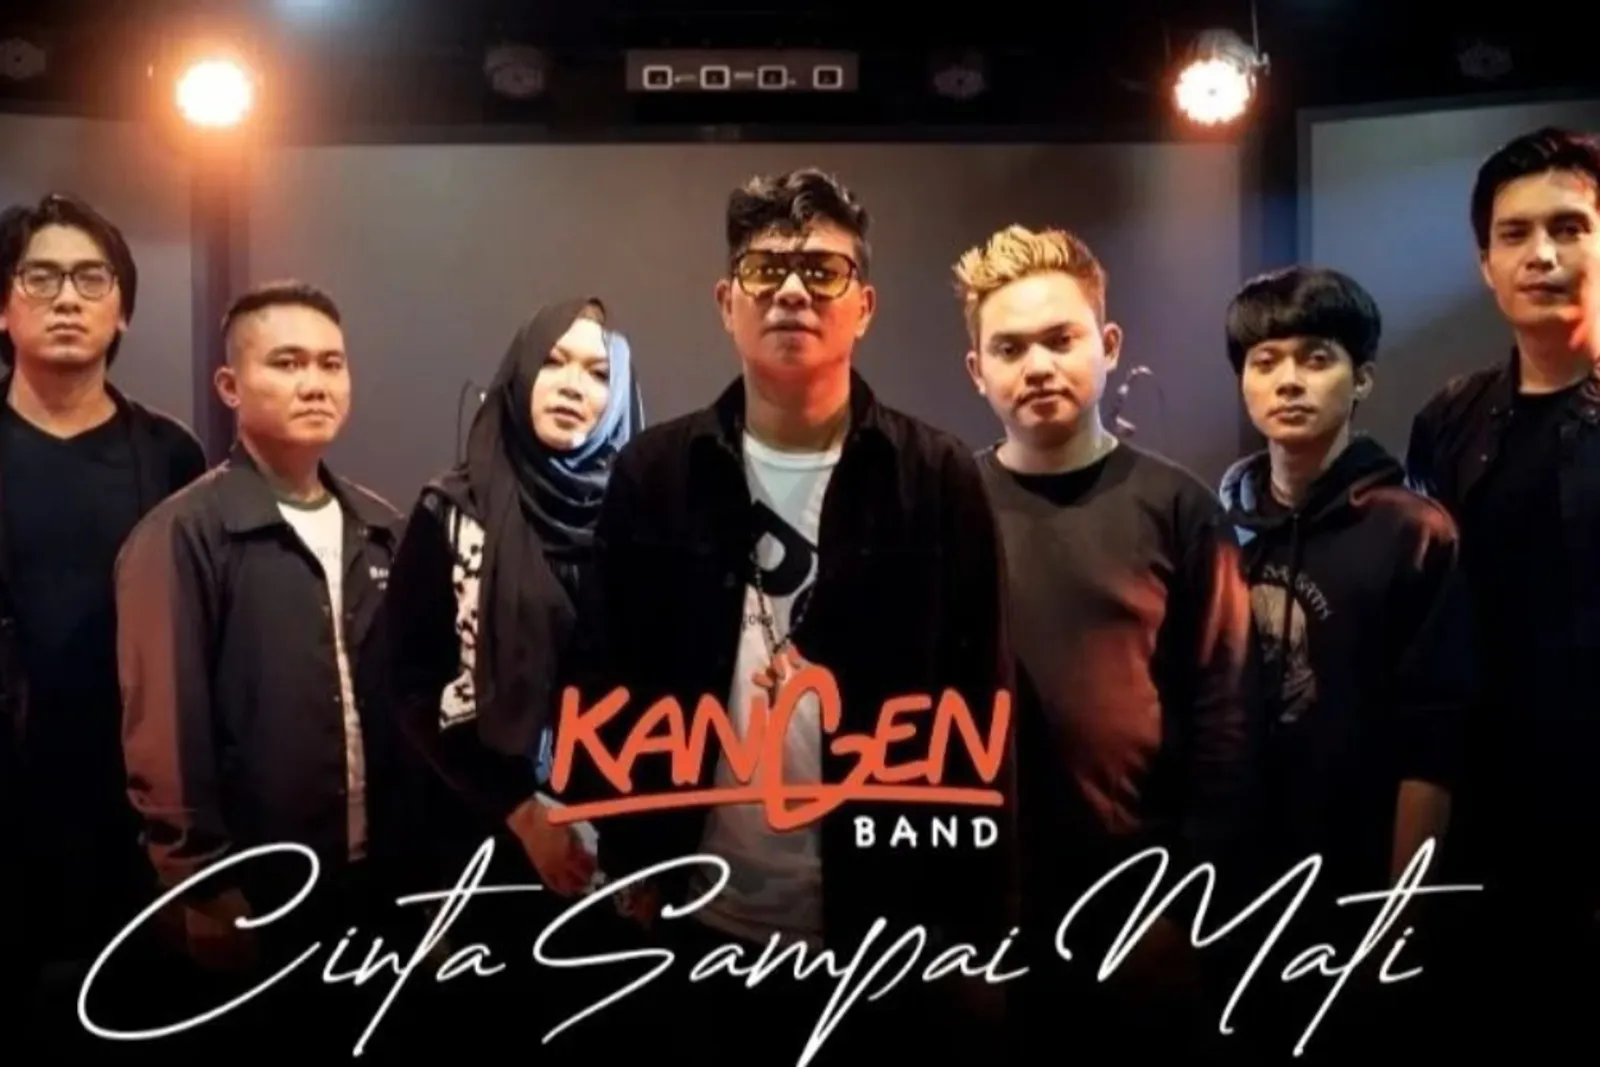 Lirik “Cinta Sampai Mati” Kangen Band: Kisah Percintaan yang Abadi